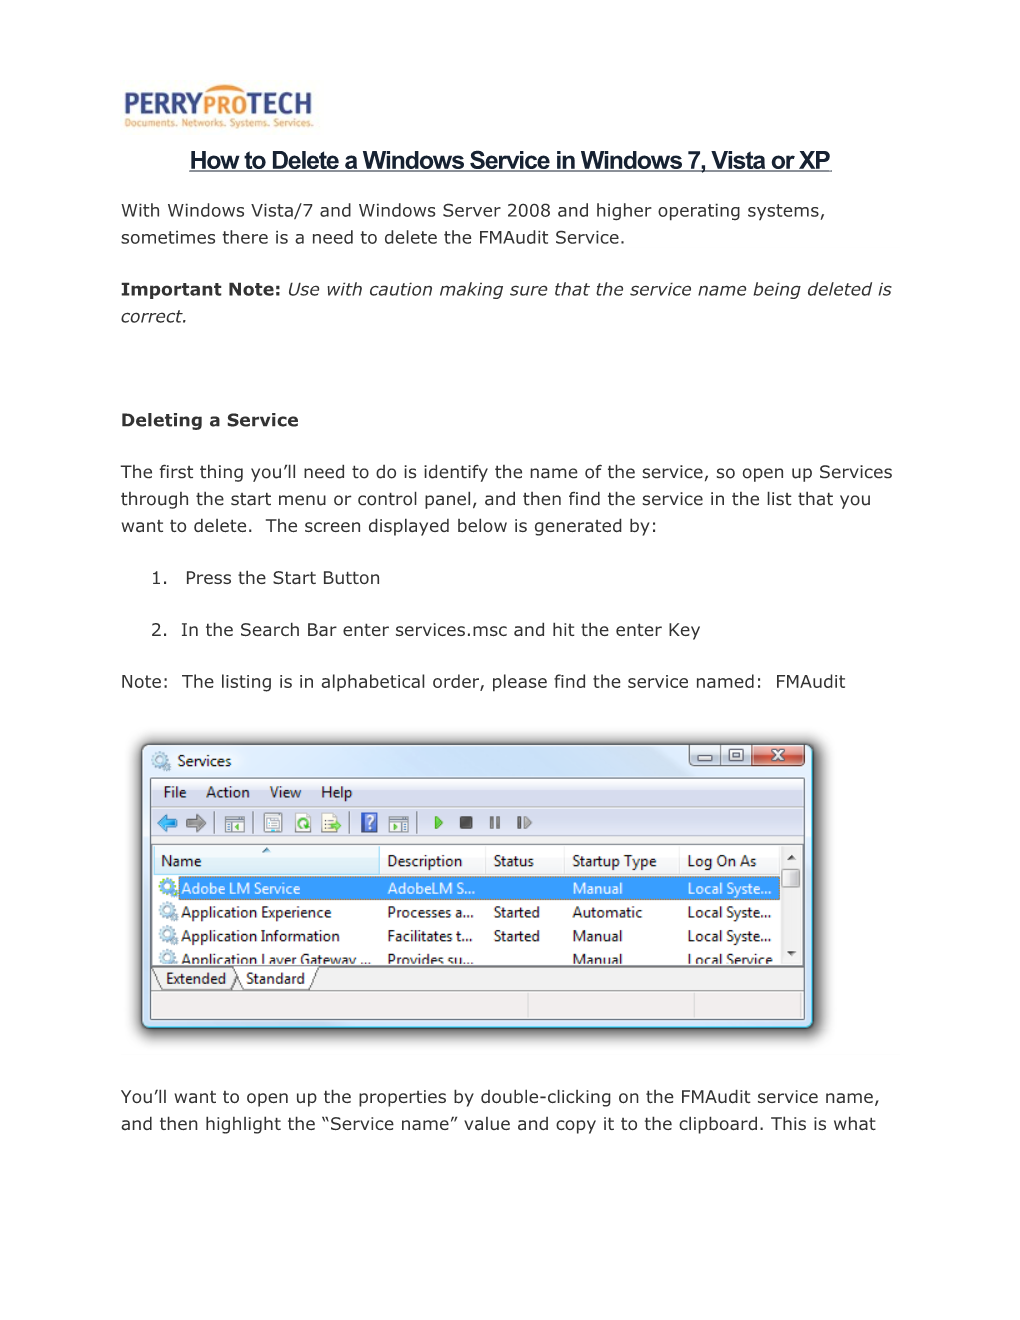 How to Delete a Windows Service in Windows 7, Vista Or XP